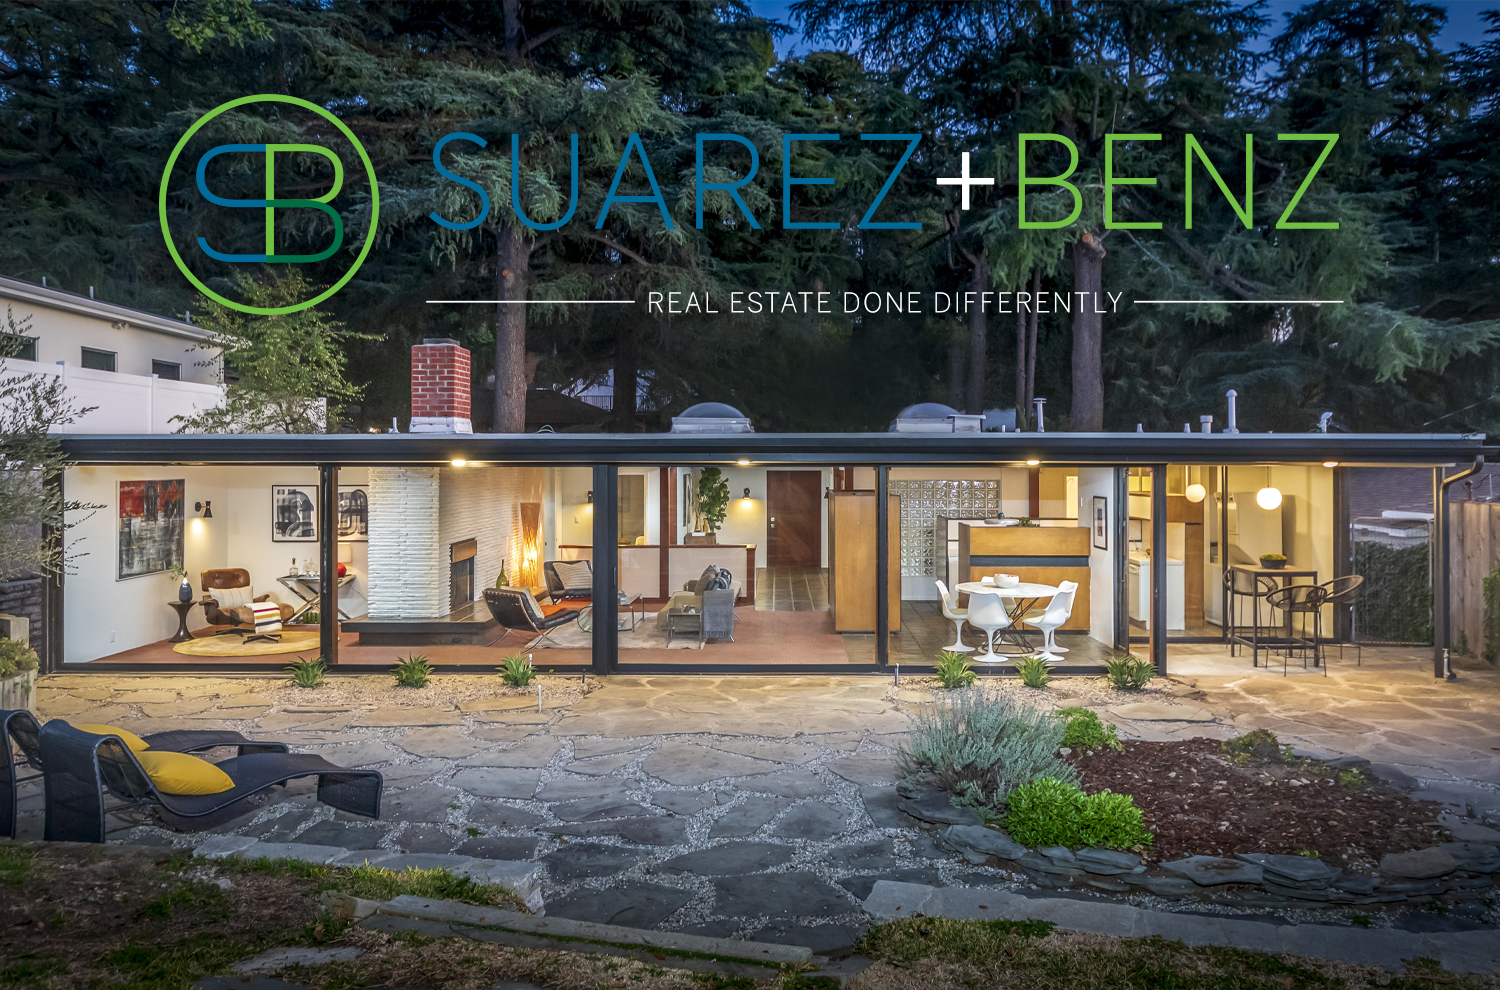 Midcentury modern home with Suarez+Benz logo